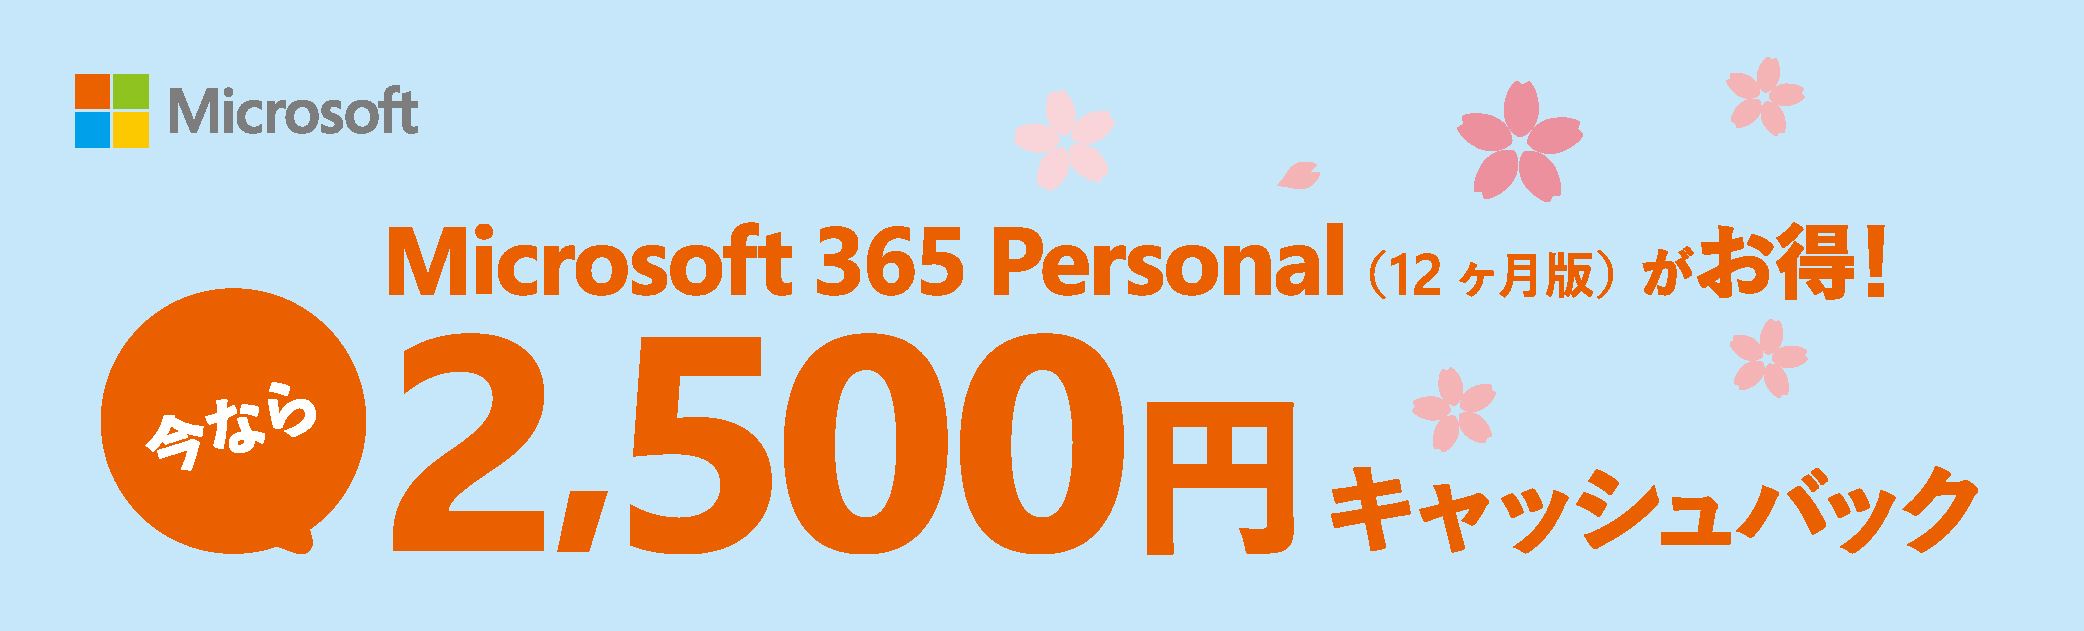 Microsoft 365 Personal 新生活応援 キャッシュバック キャンペーン